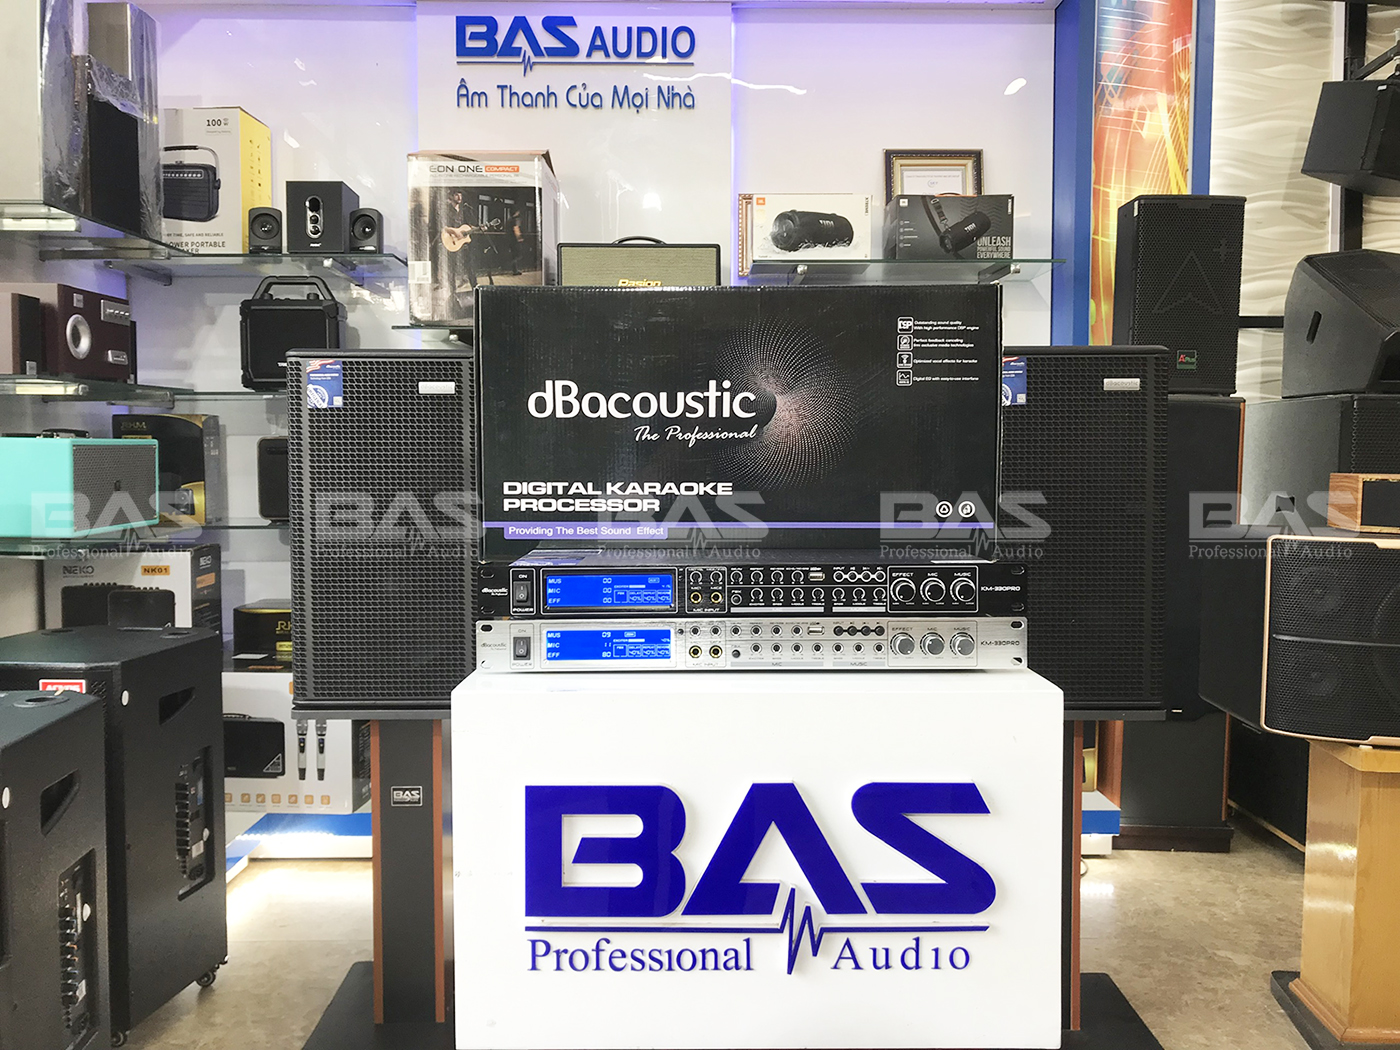 Vang cơ lai số dBacoustic KM 330 Pro tại BAS Audio Nam Định